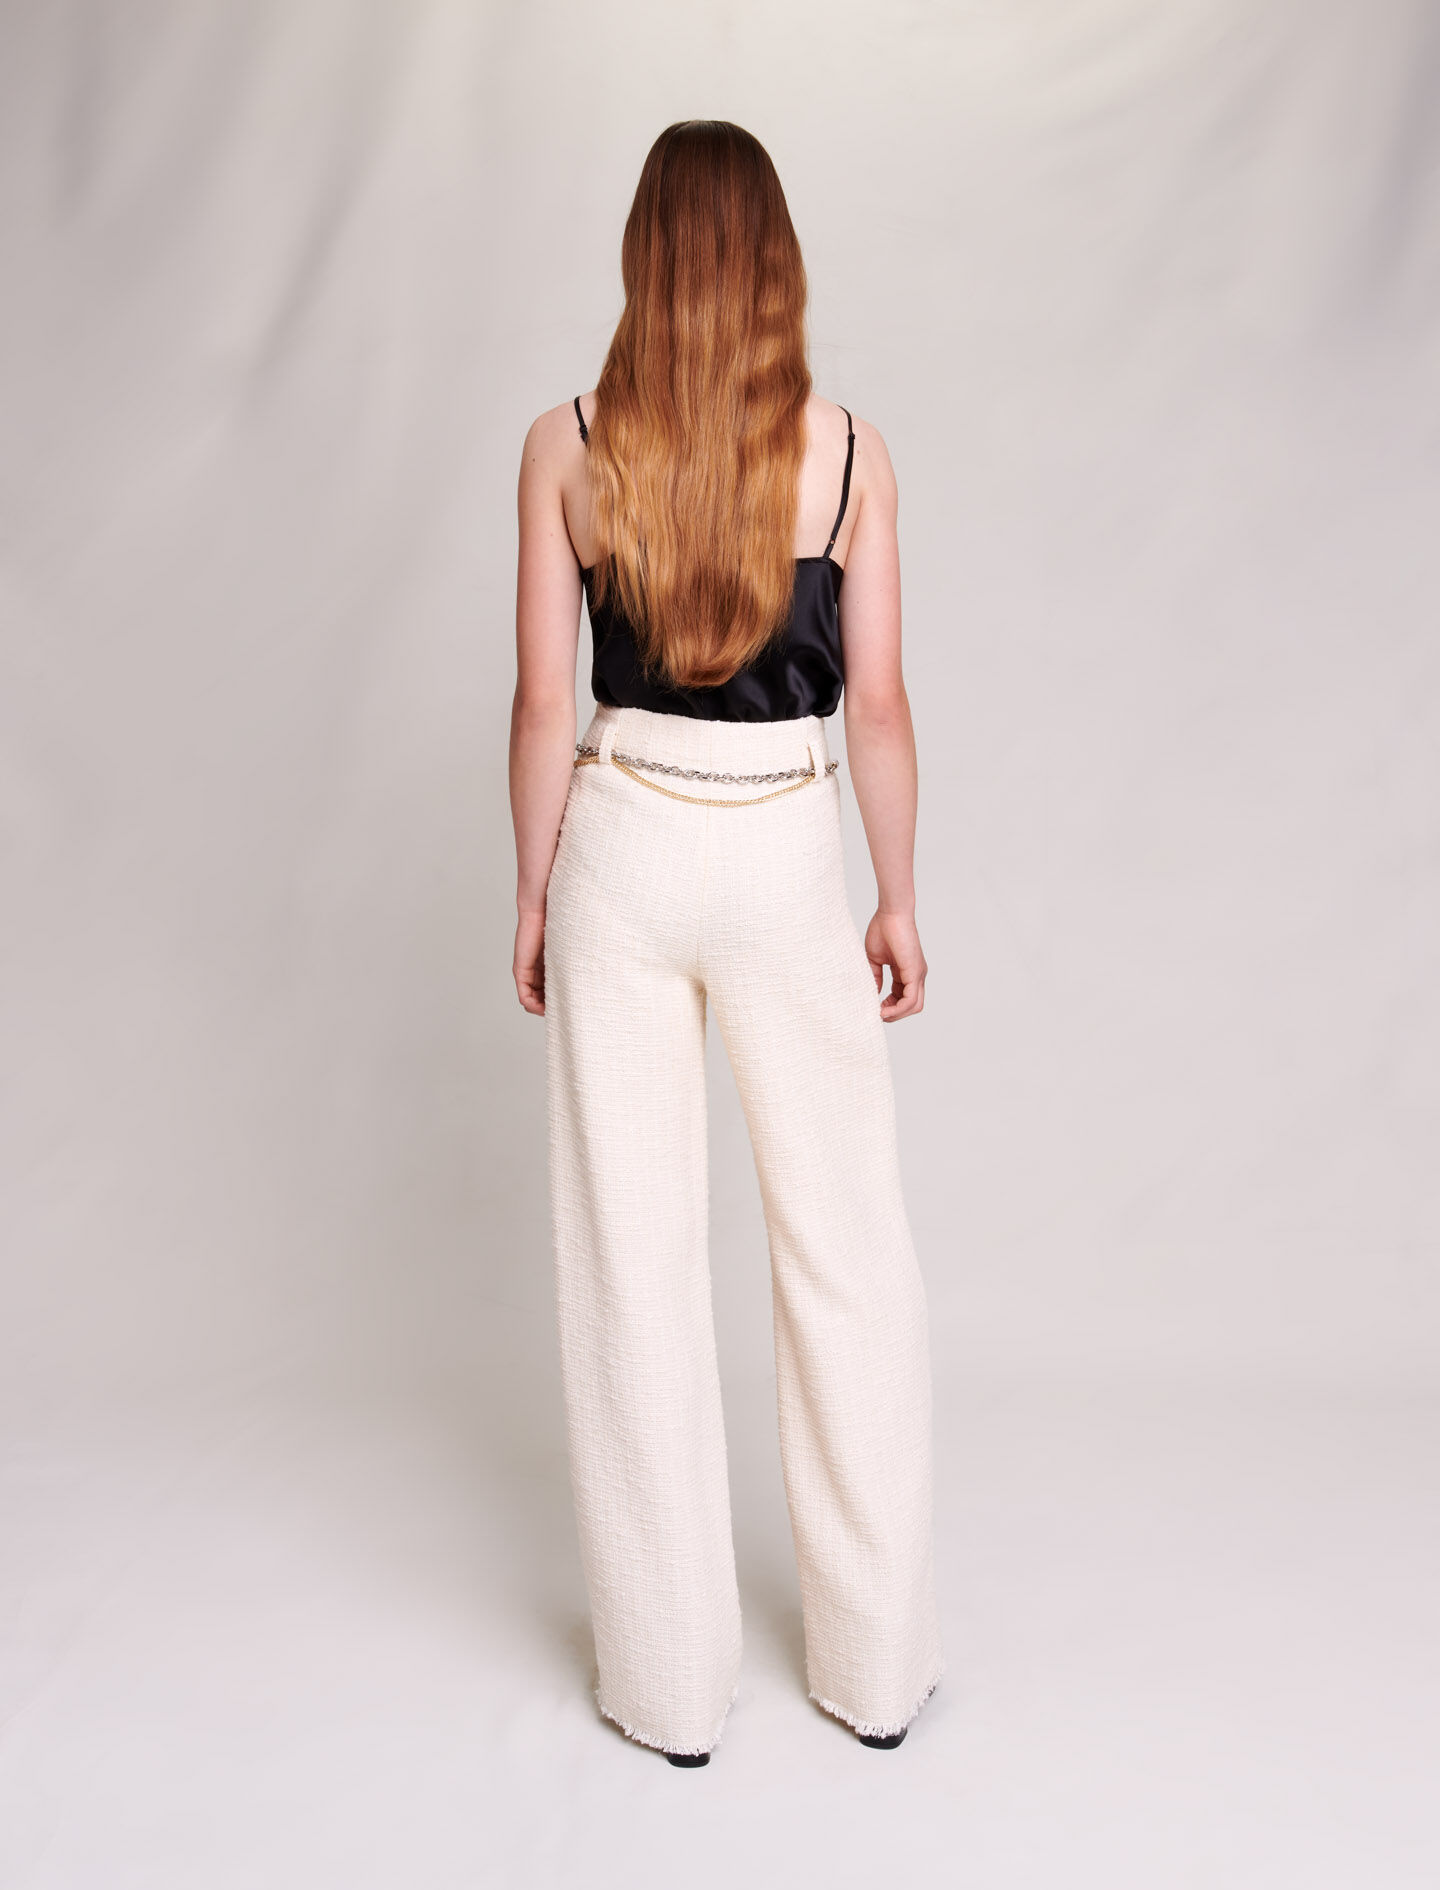 Buy Off White Trousers & Pants for Women by Encrustd Online | Ajio.com